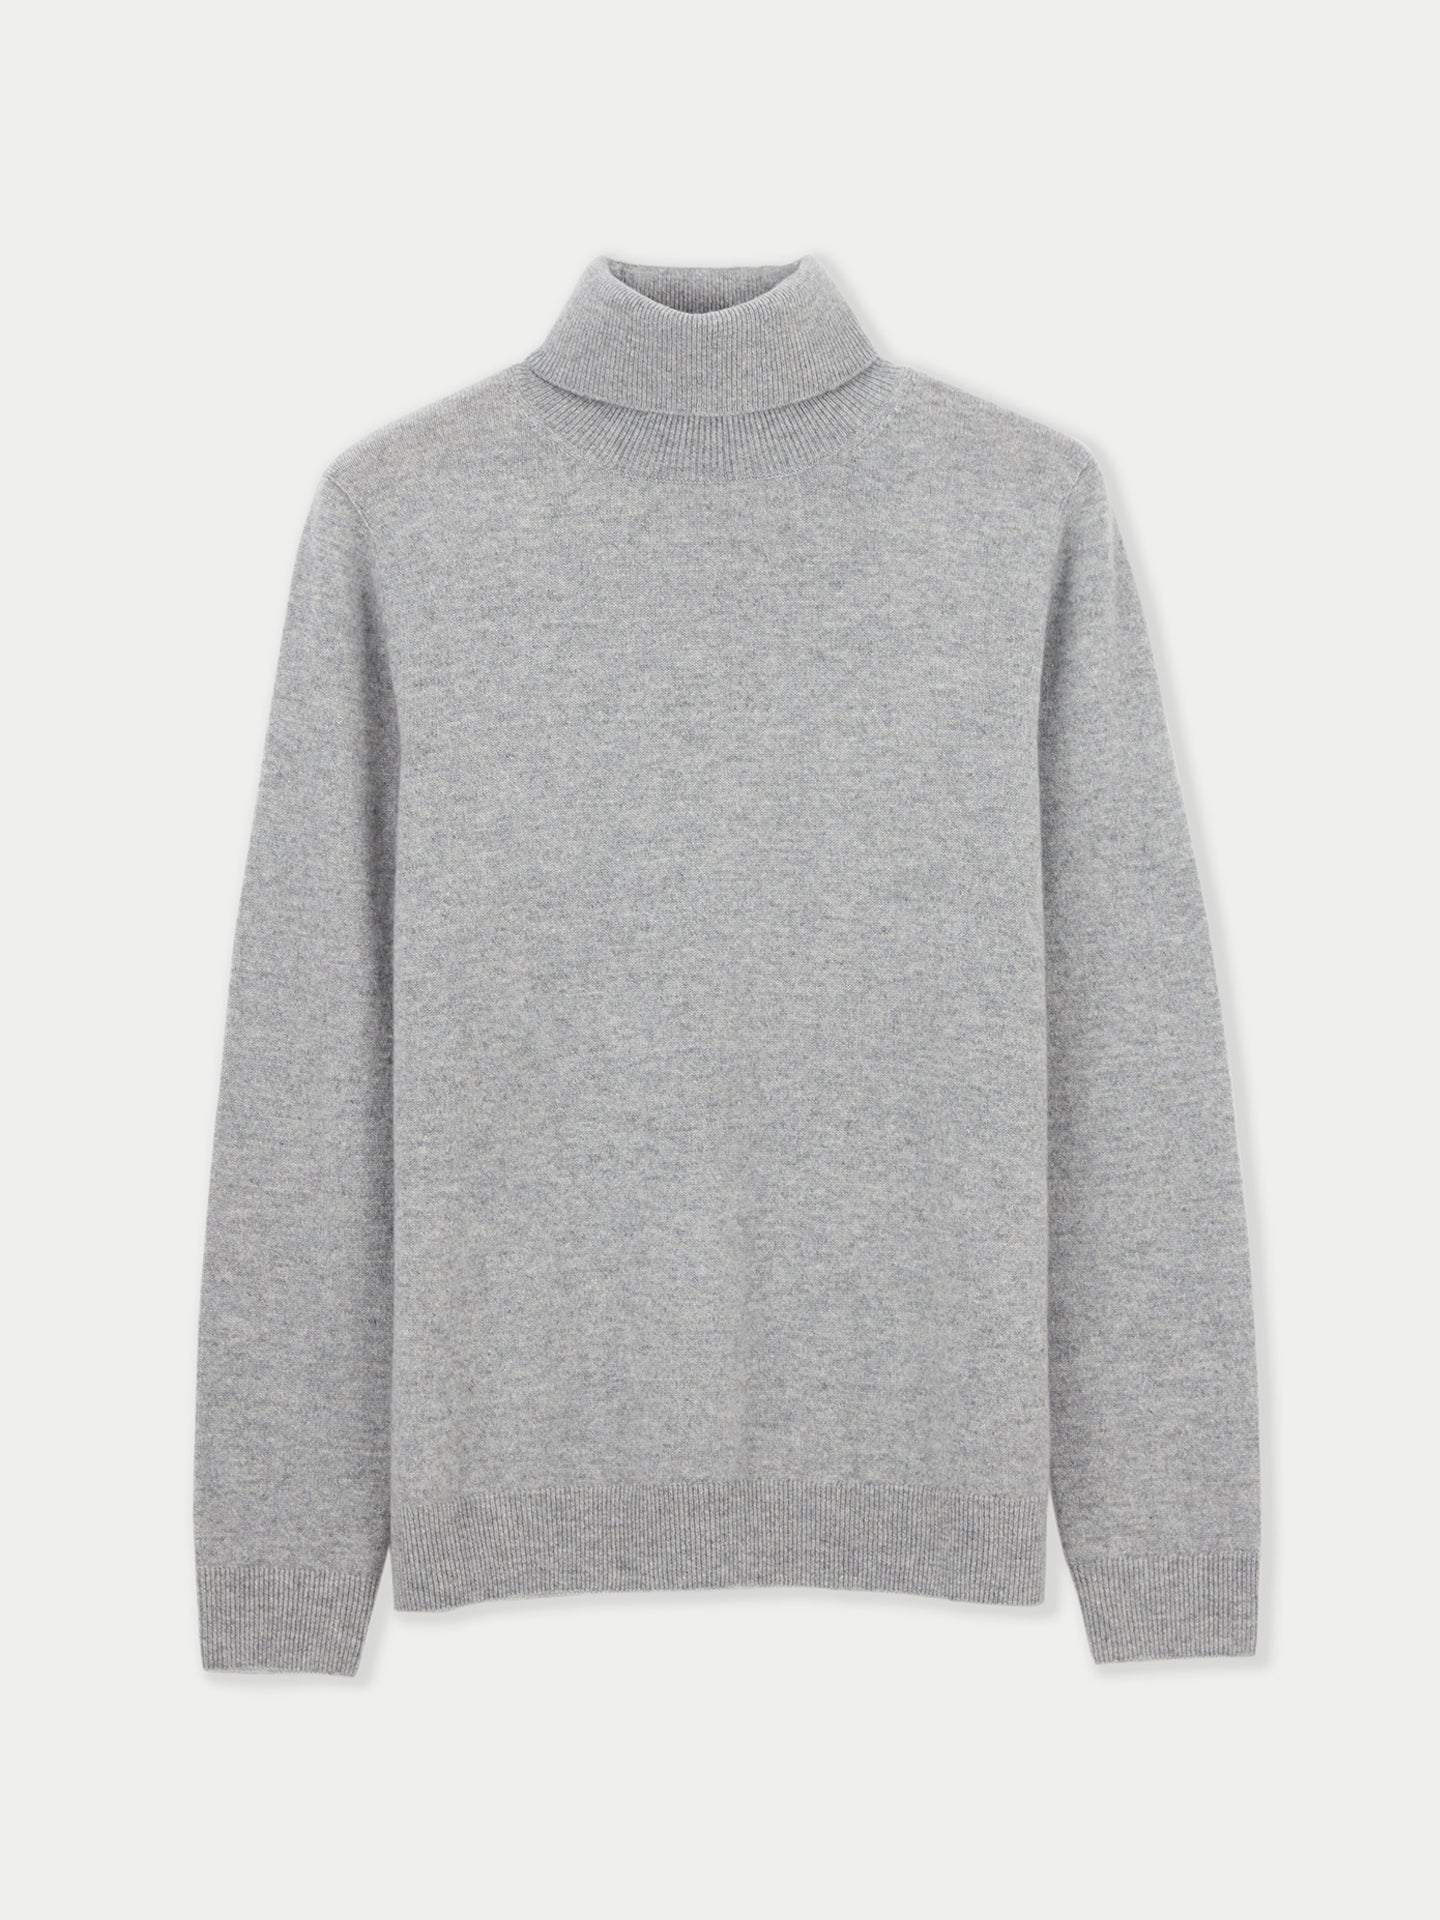 Men's Cashmere Turtle Neck Sweater Gray - Gobi Cashmere